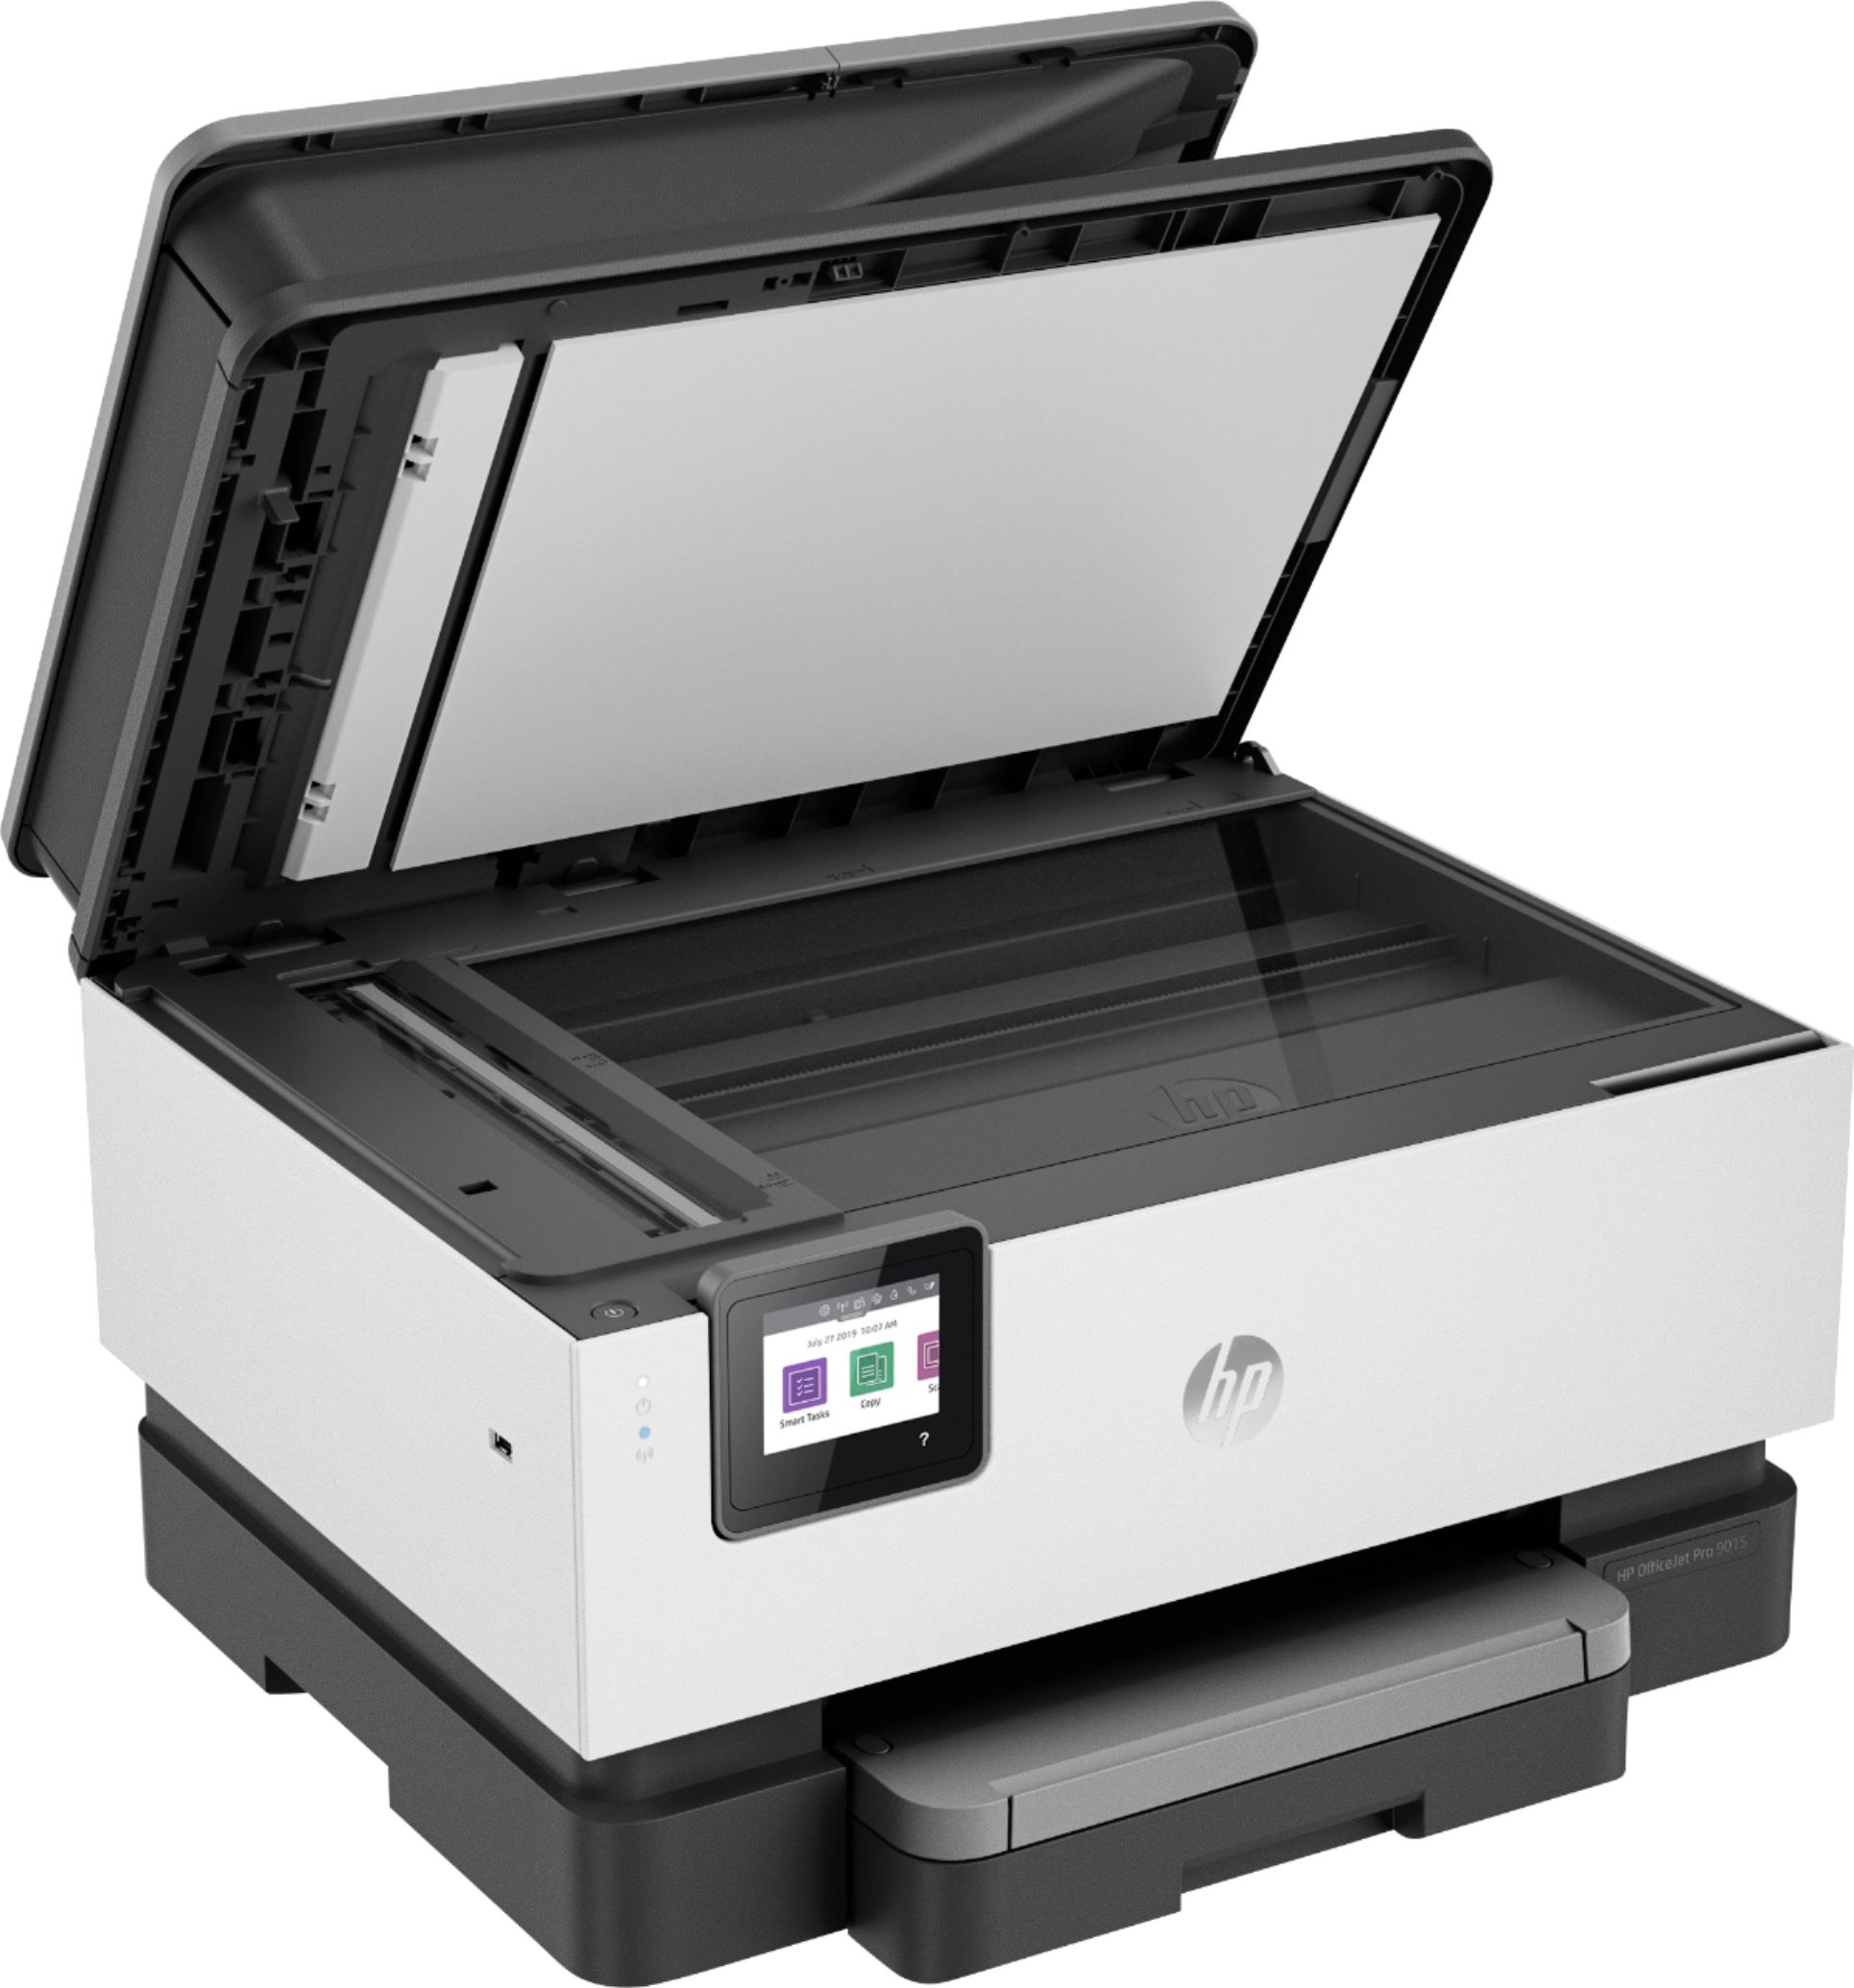 HP OfficeJet Pro 9015 All-in-One Wireless Printer - Centrifugal  Technologies LTD